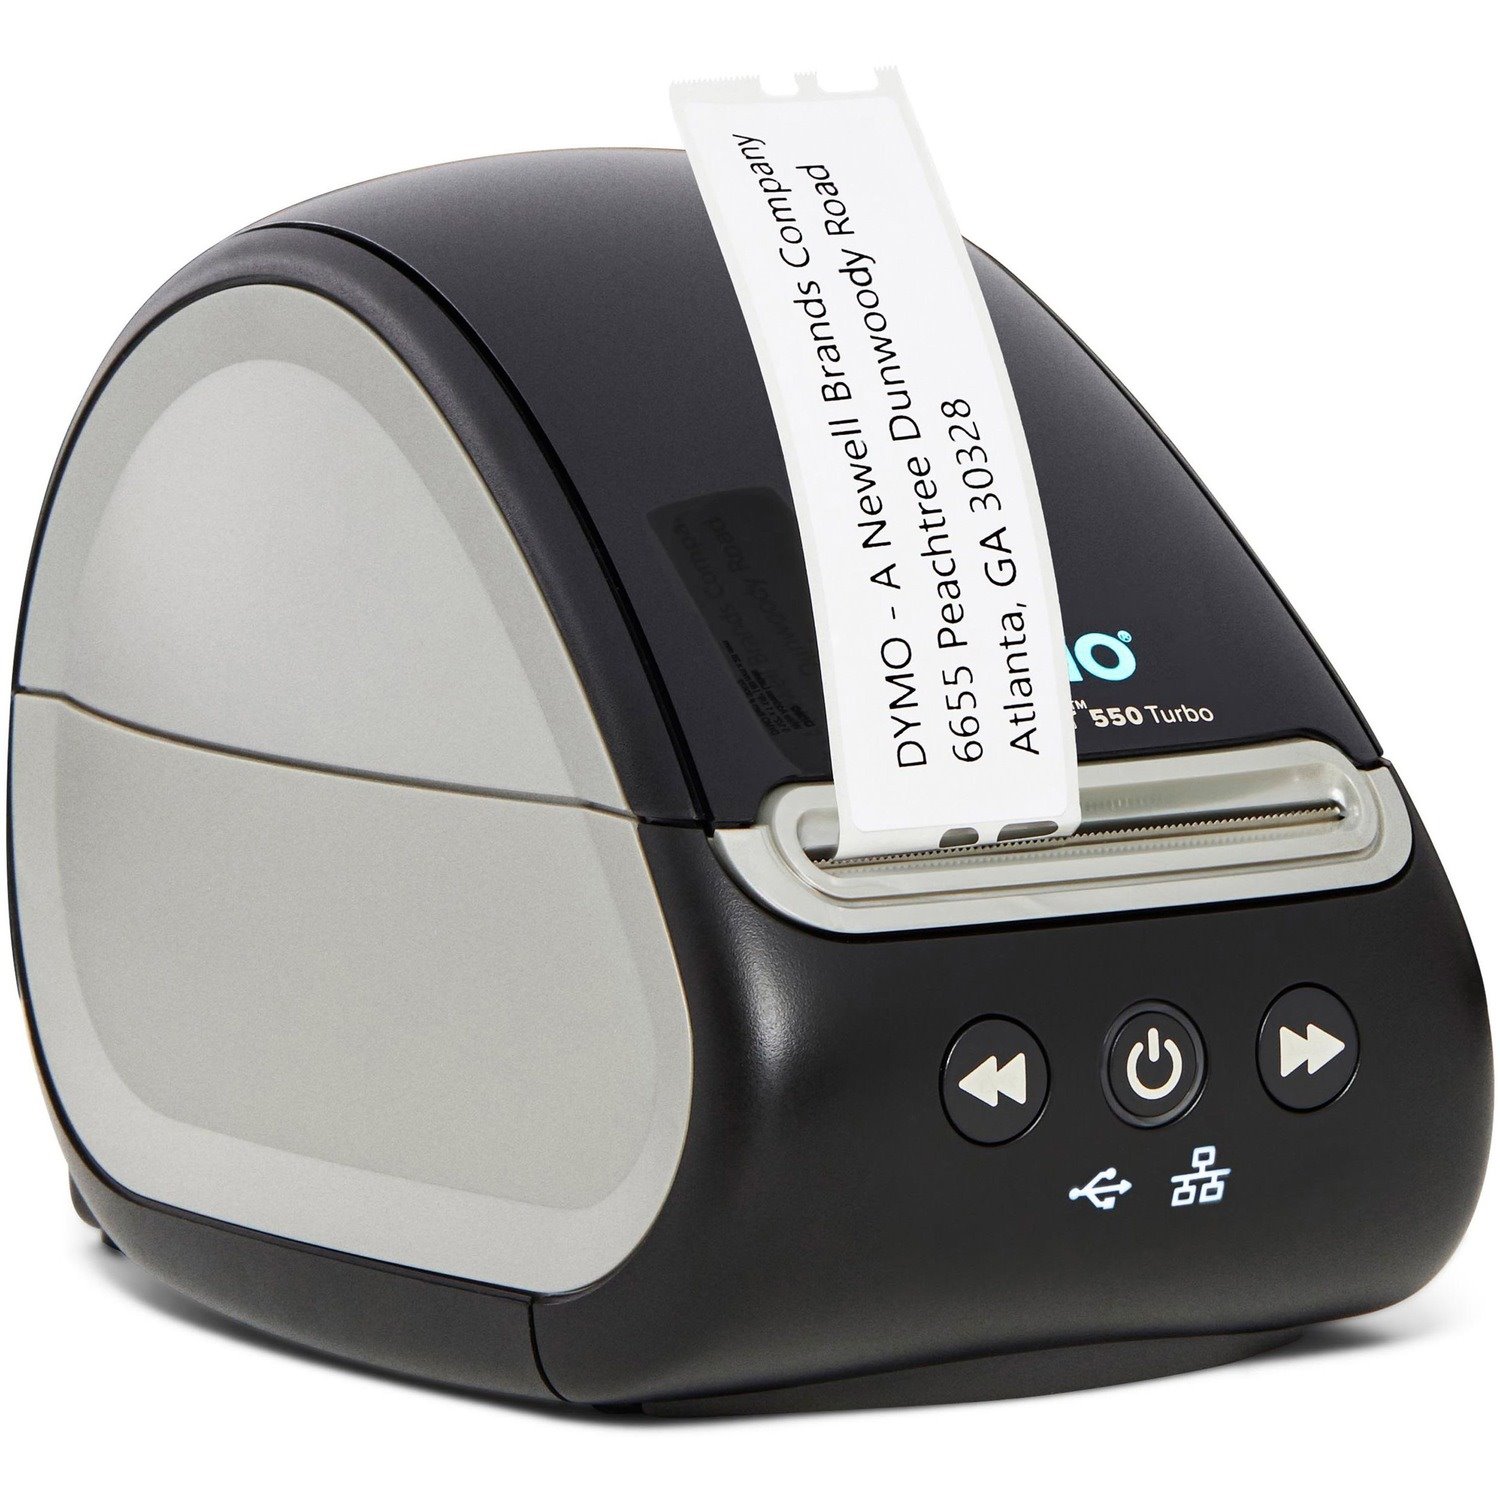 Dymo LabelWriter 550 Direct Thermal Printer - Monochrome - Label Print - Ethernet - USB - USB Host - Black